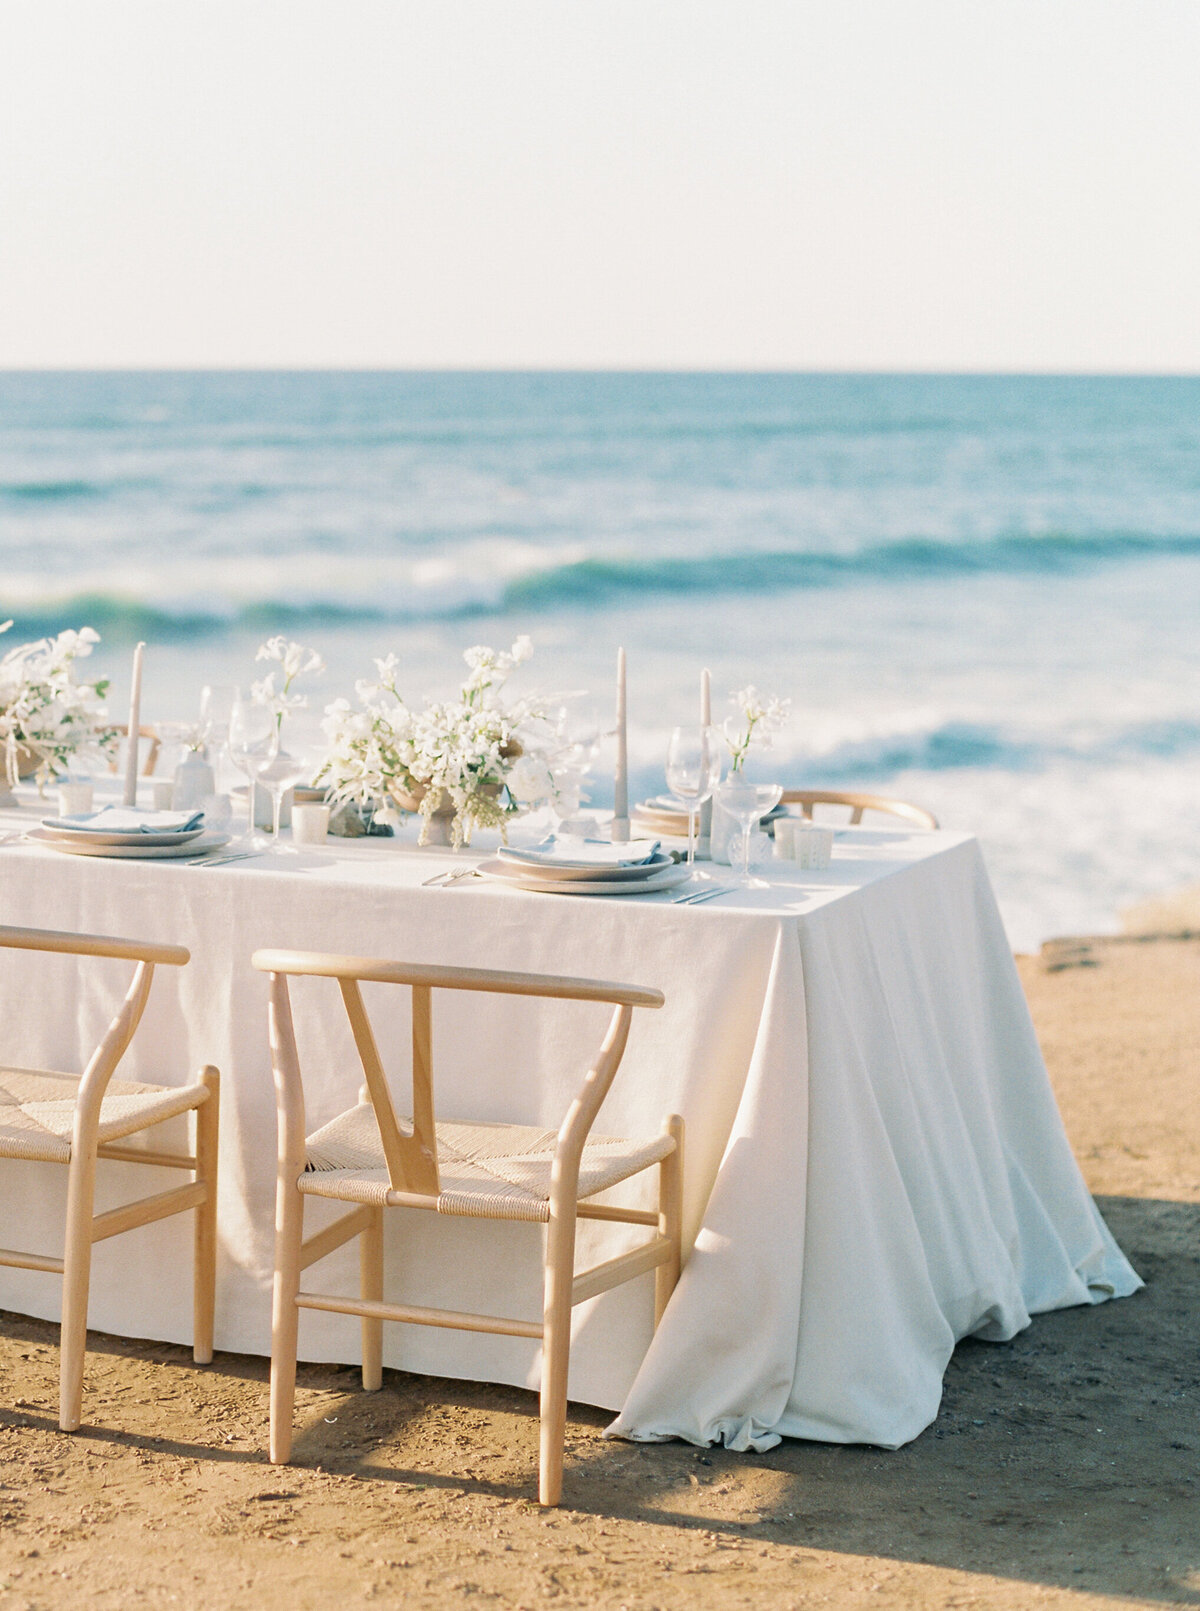 max-owens-design-california-destination-wedding-florist-11-reception-table